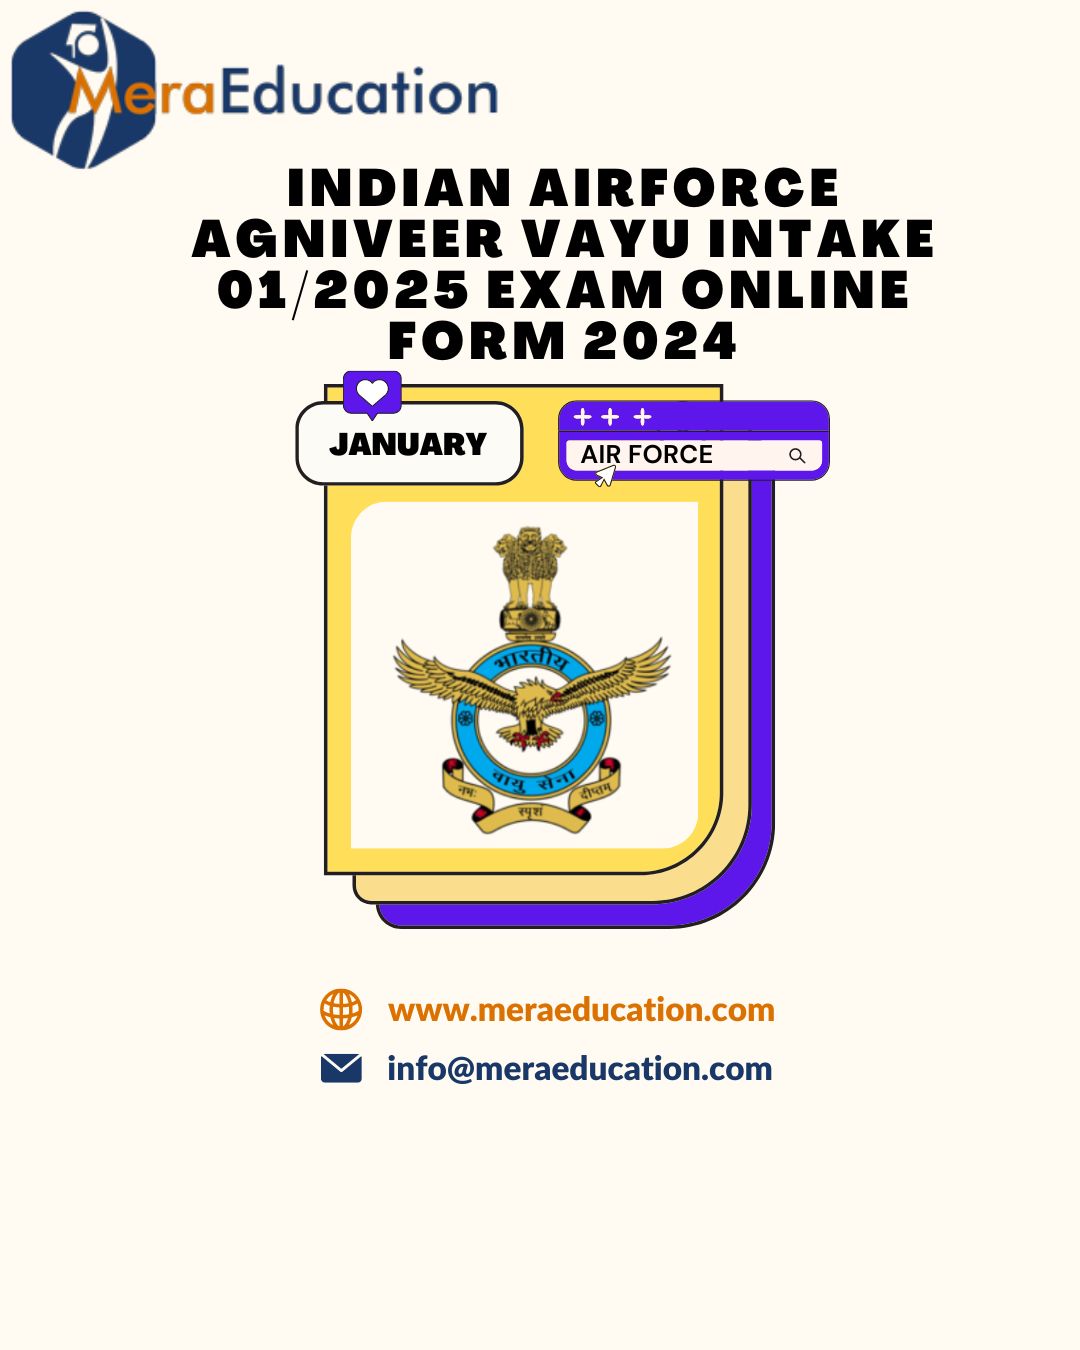 Indian Airforce Agniveer Vayu Intake 01/2025 Exam Online Form 2024